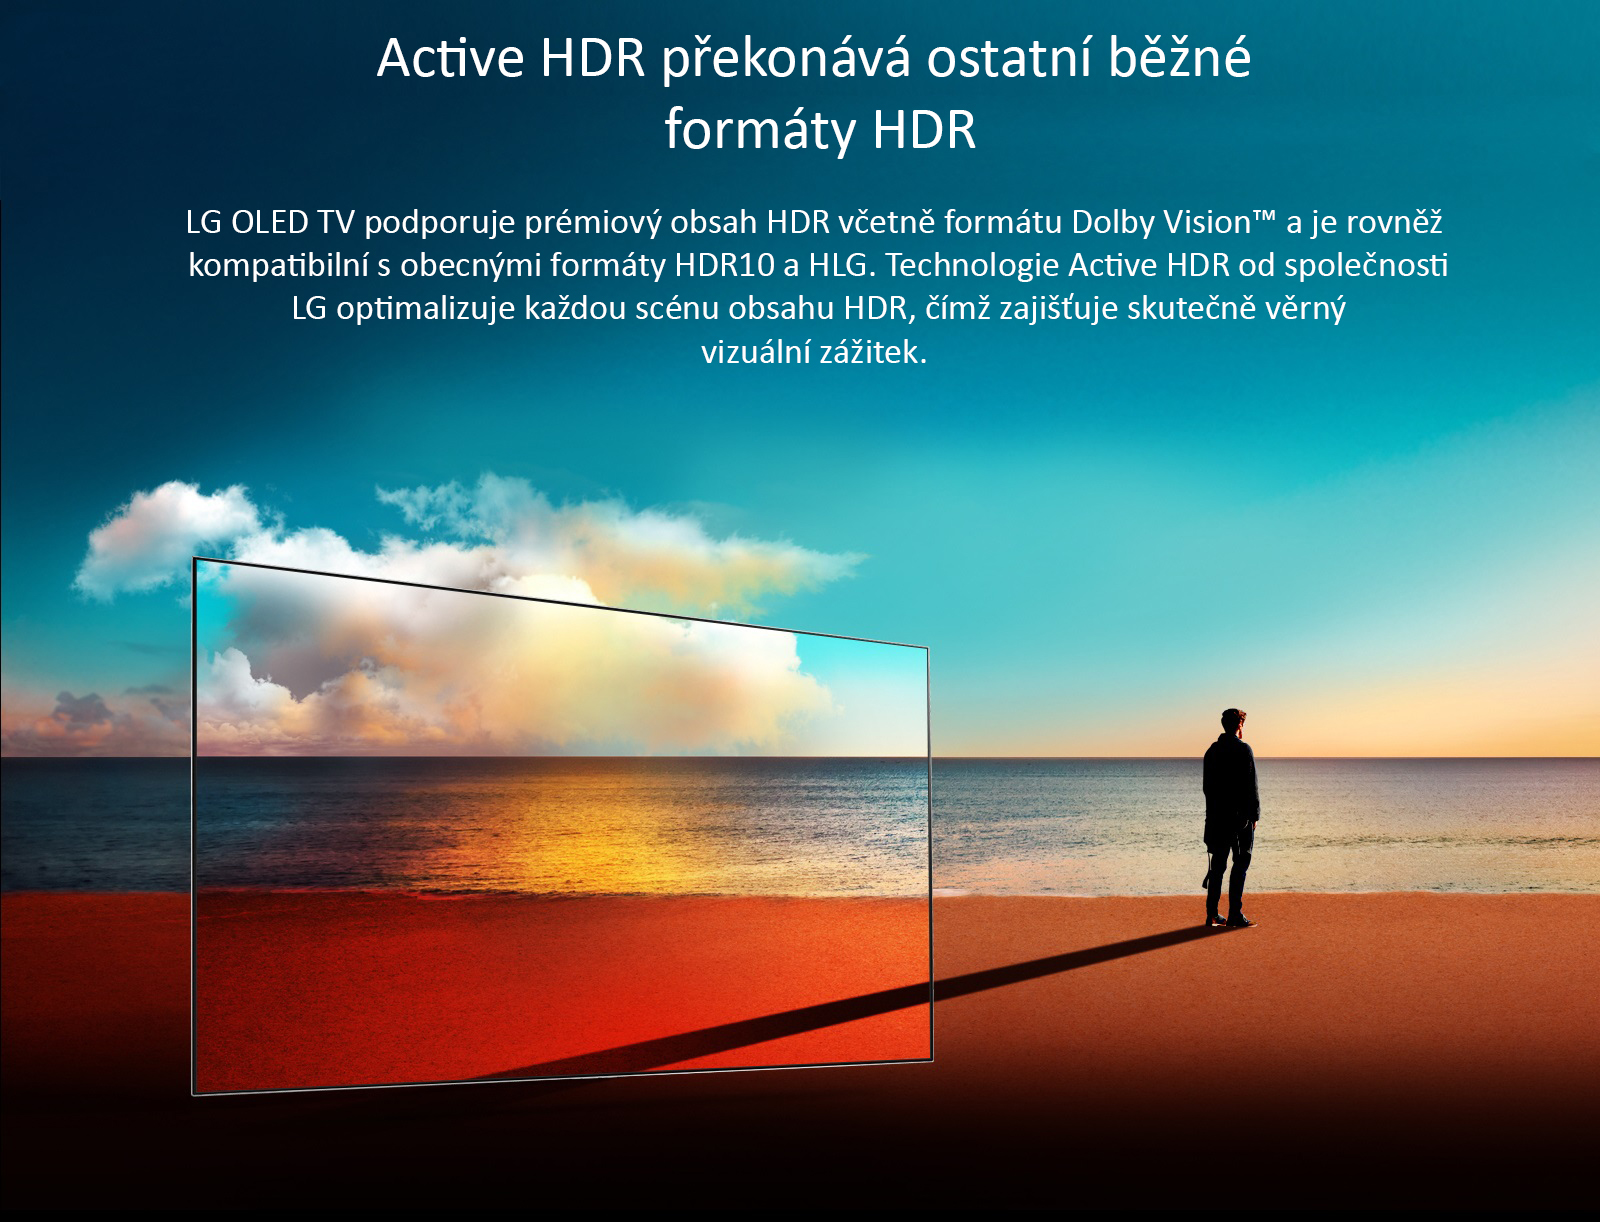 LG HDR active